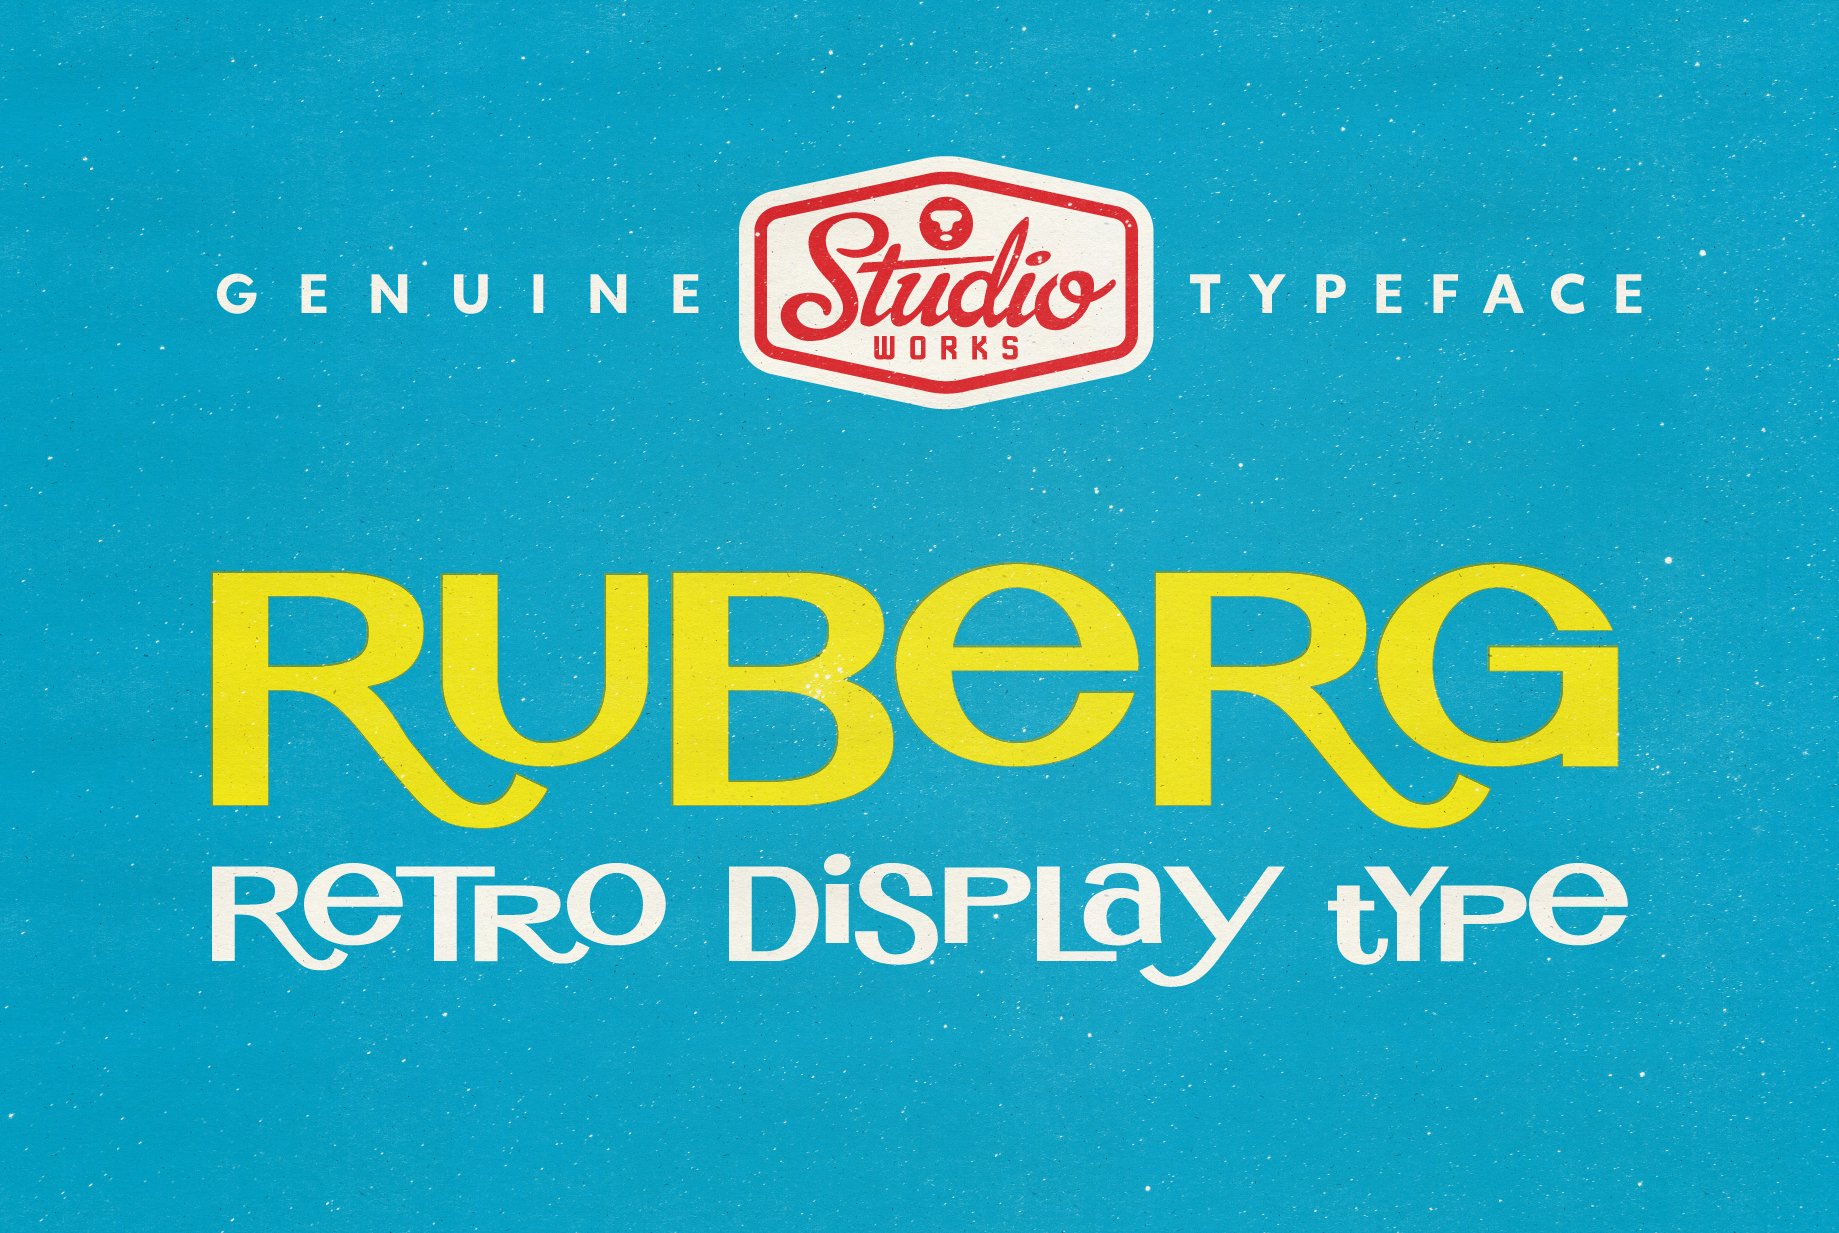 Ruberg | Retro Display Type! cover image.